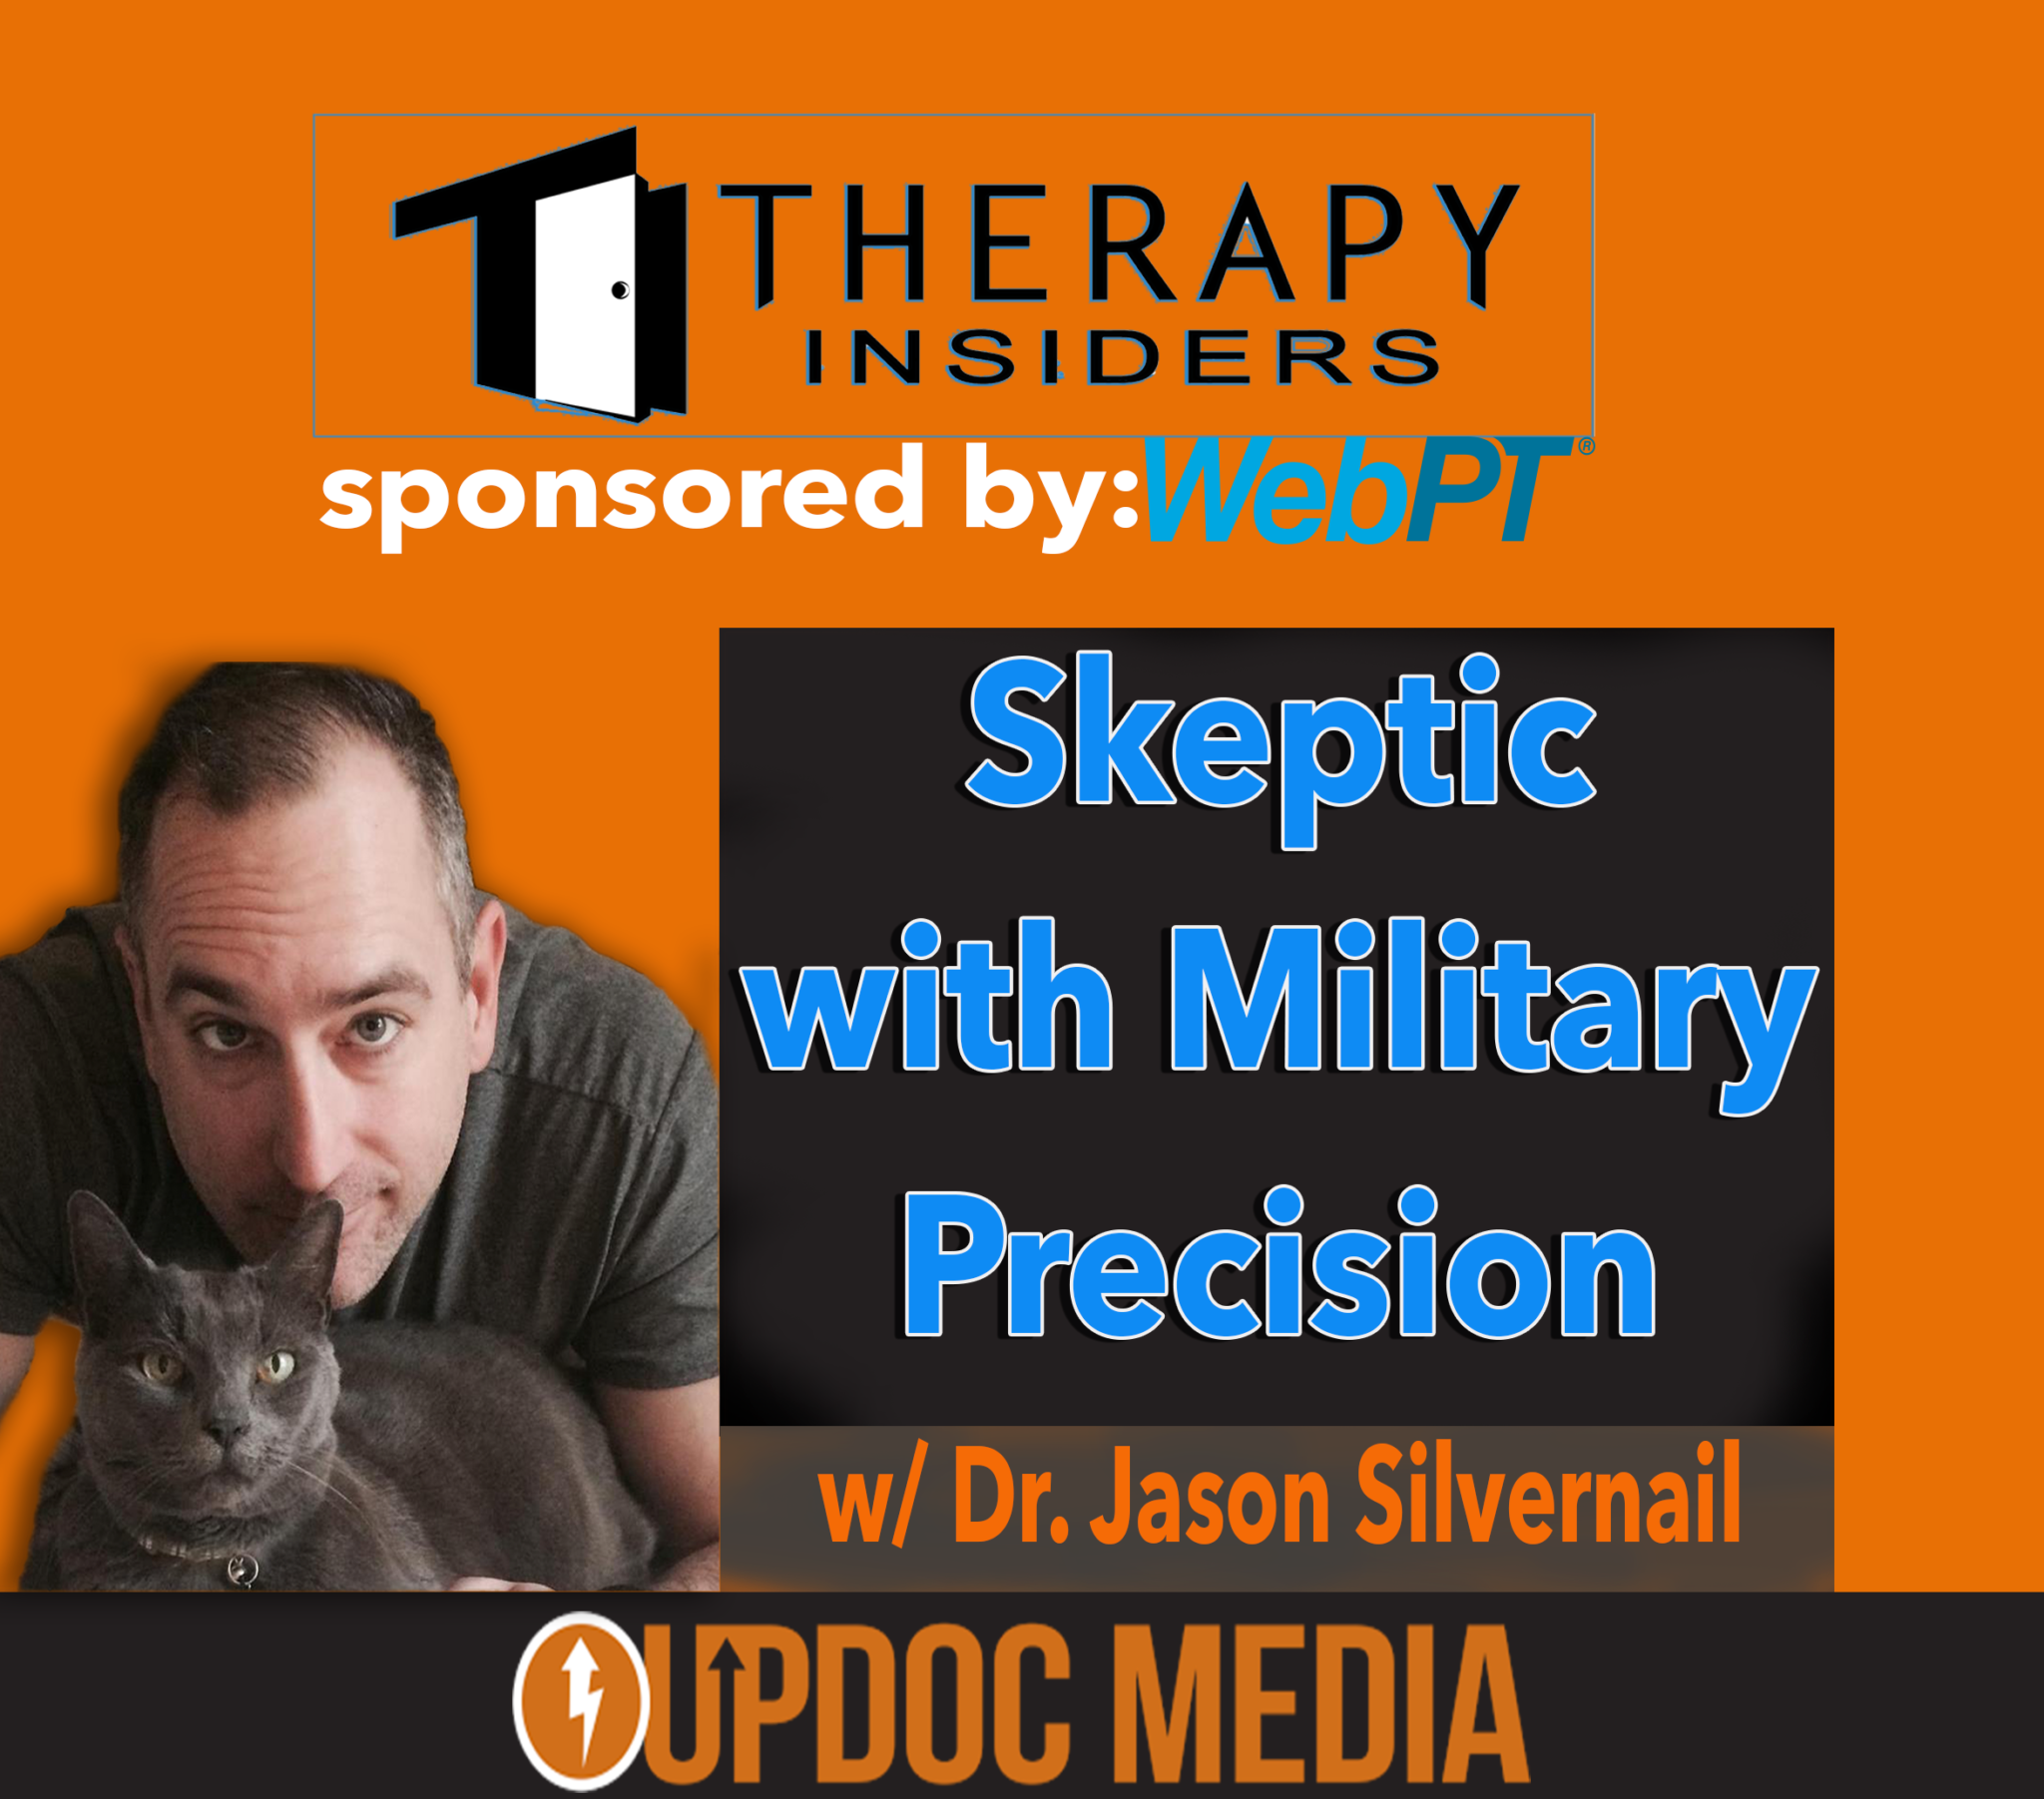 Jason Silvernail on Therapy Insiders podcast